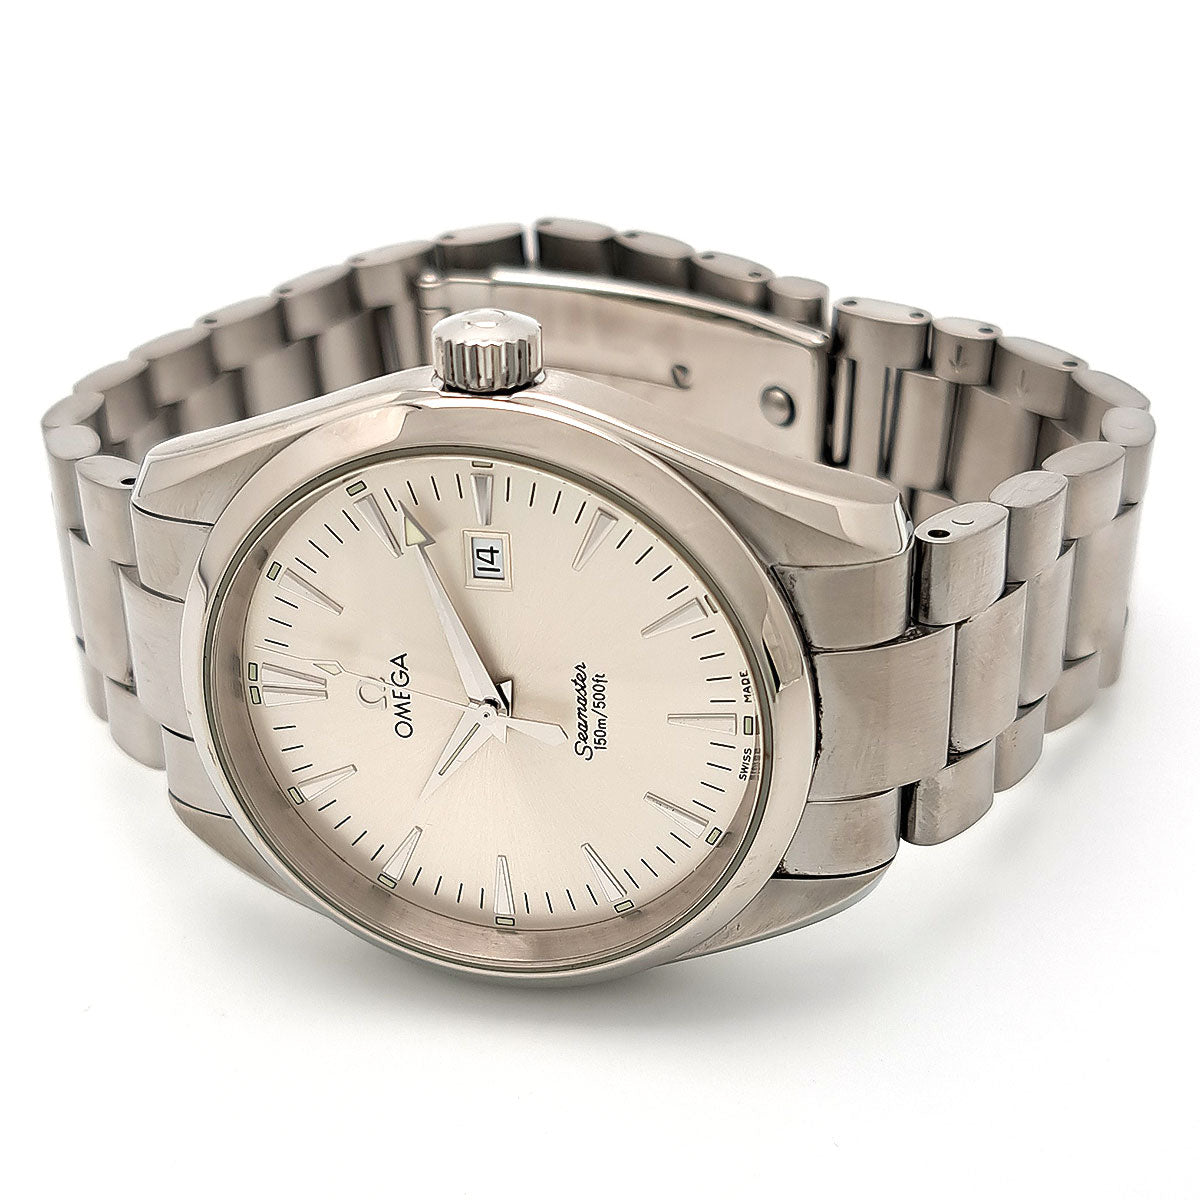 Quartz Seamaster Aqua Terra Wrist Watch 2517.3